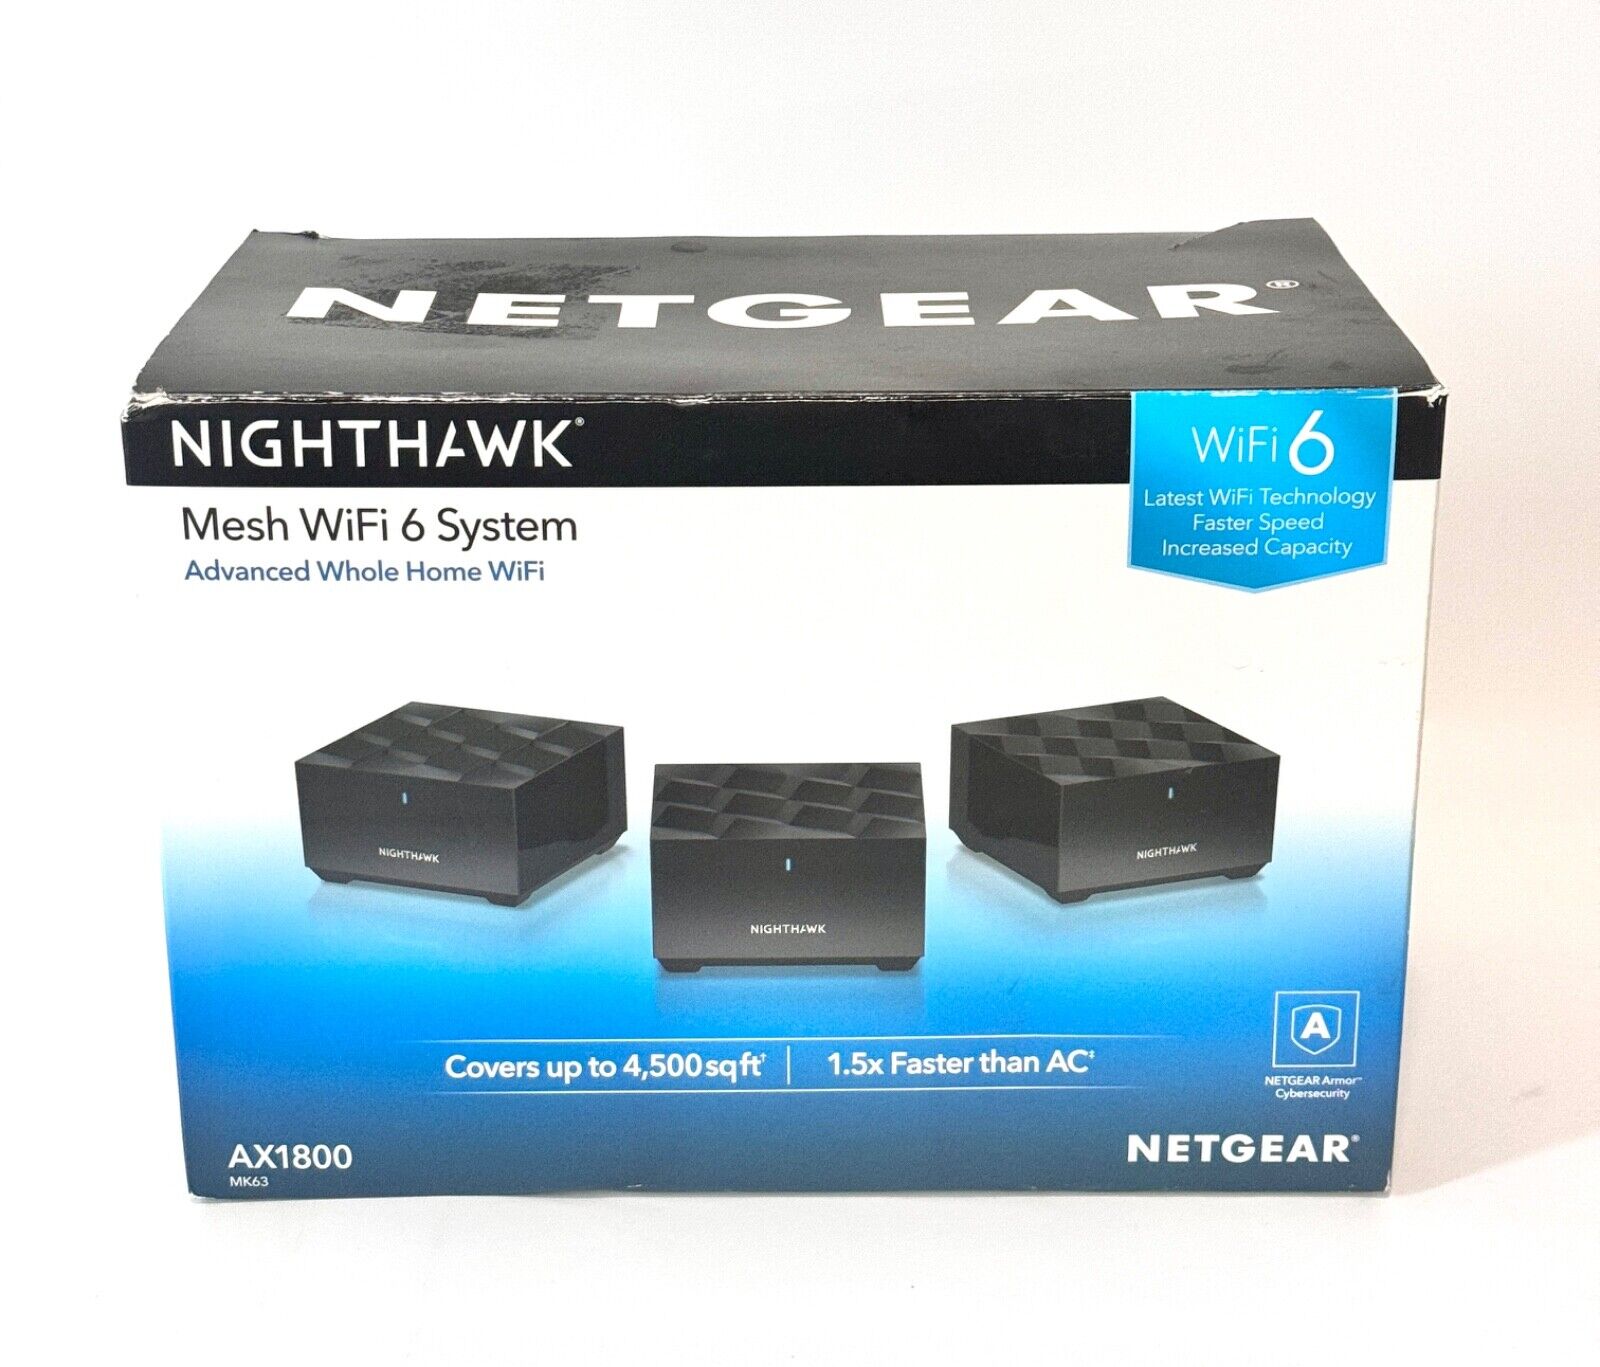 NETGEAR AX1800 NightHawk Mesh WiFi 6 System - 3 Pack